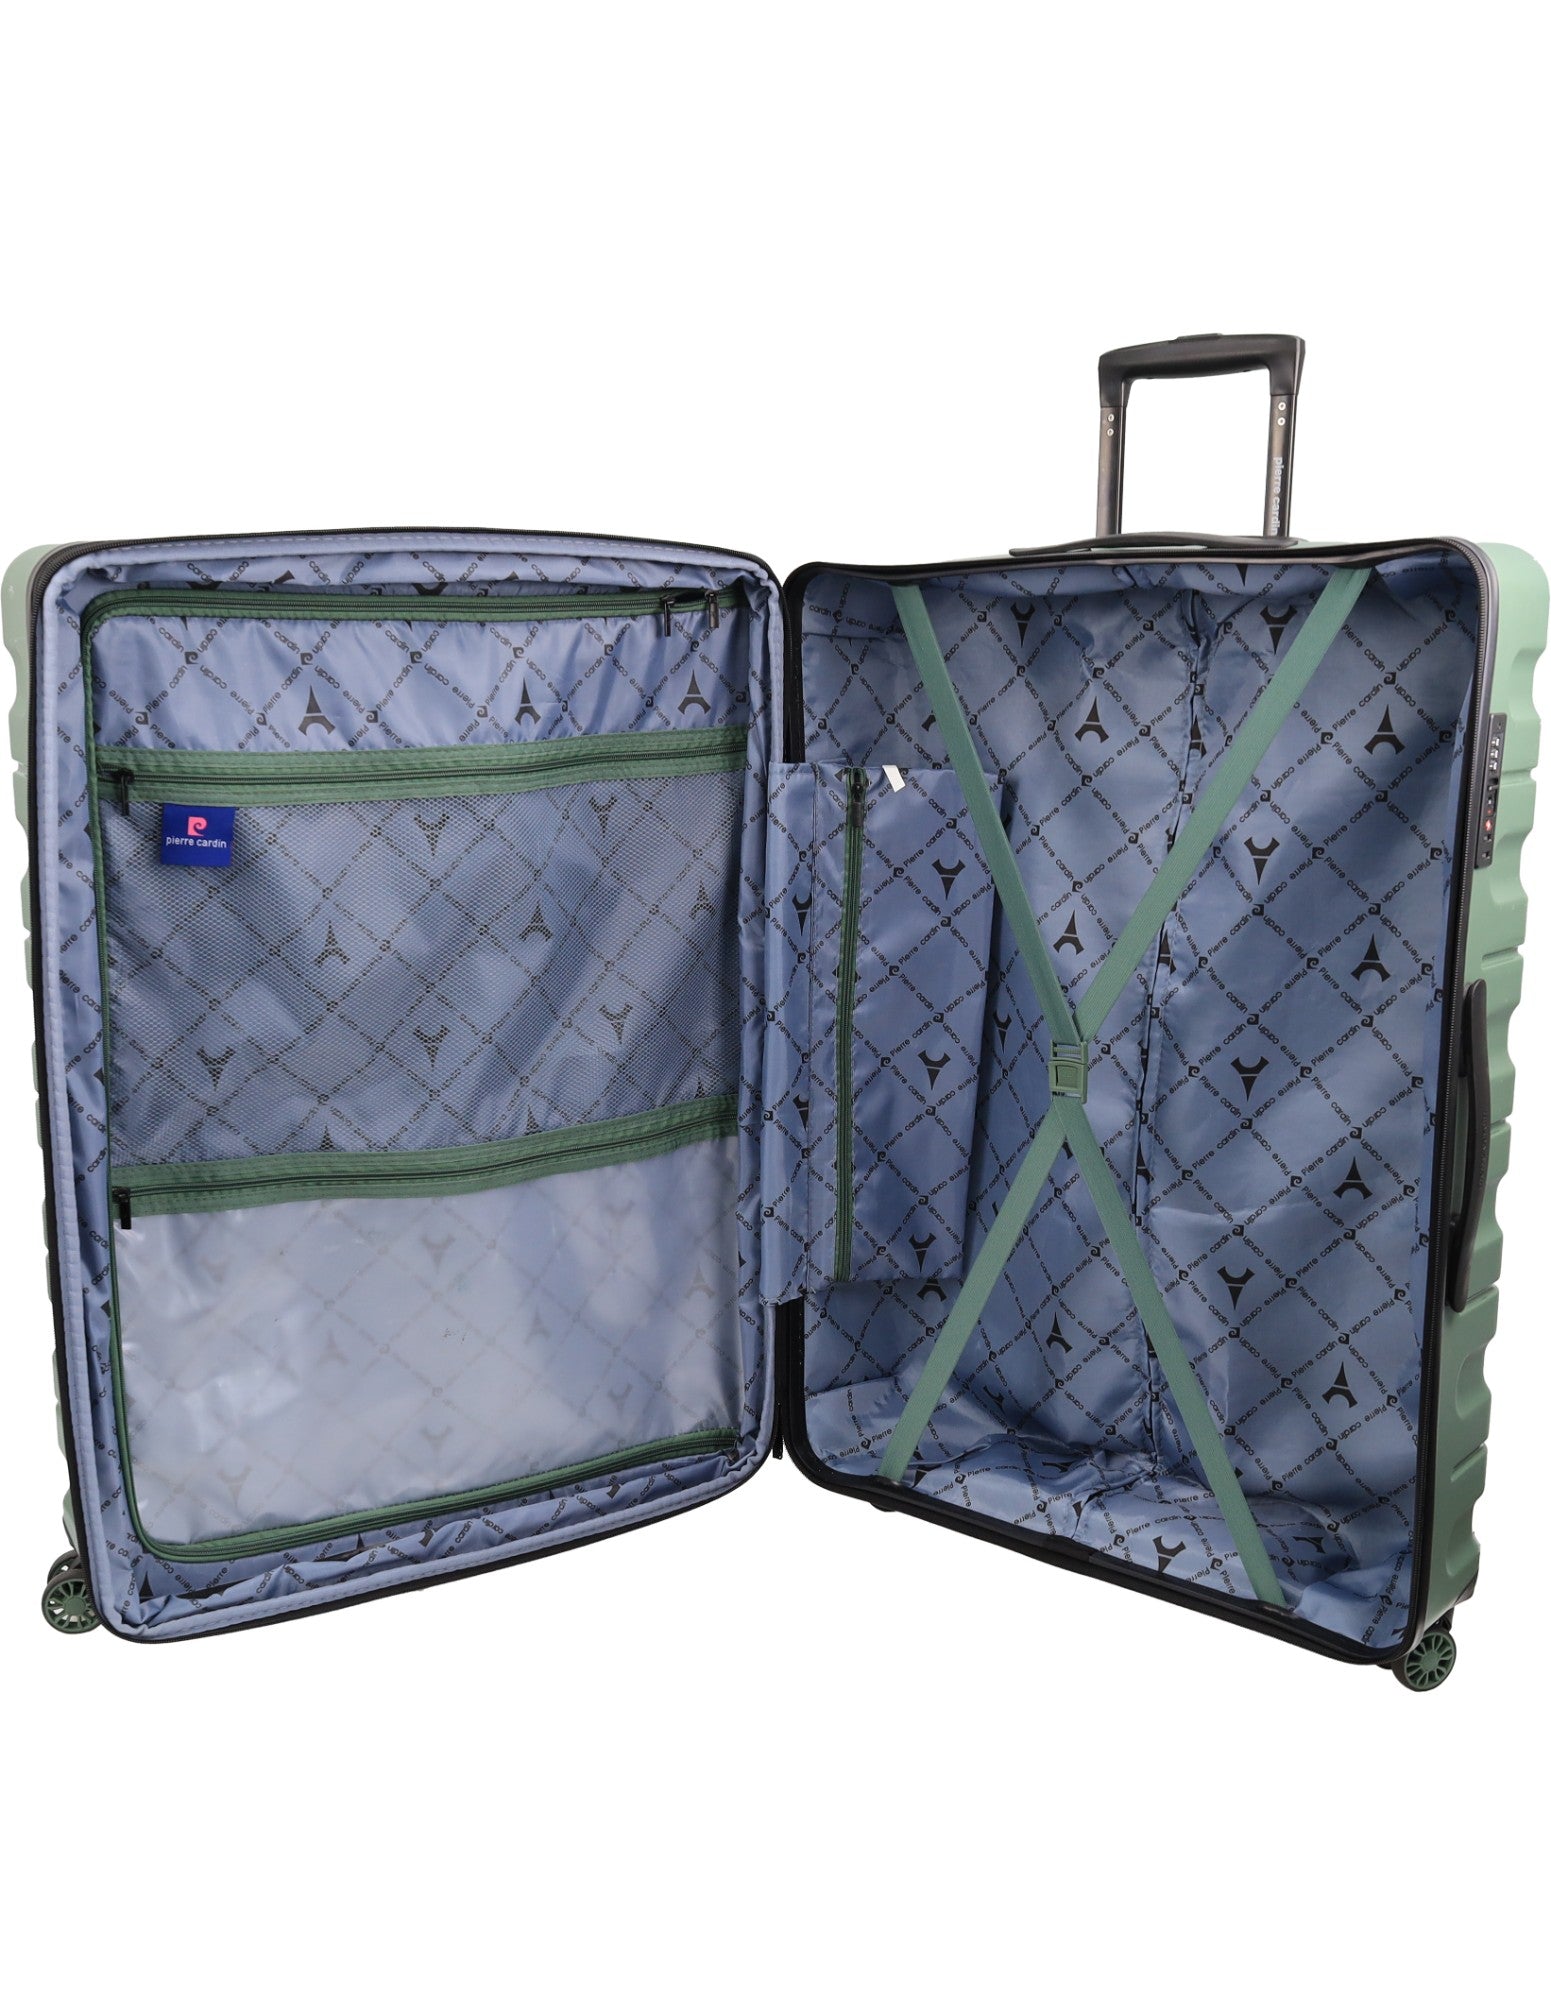 Pierre Cardin 80cm LARGE Hard Shell Suitcase in Moss